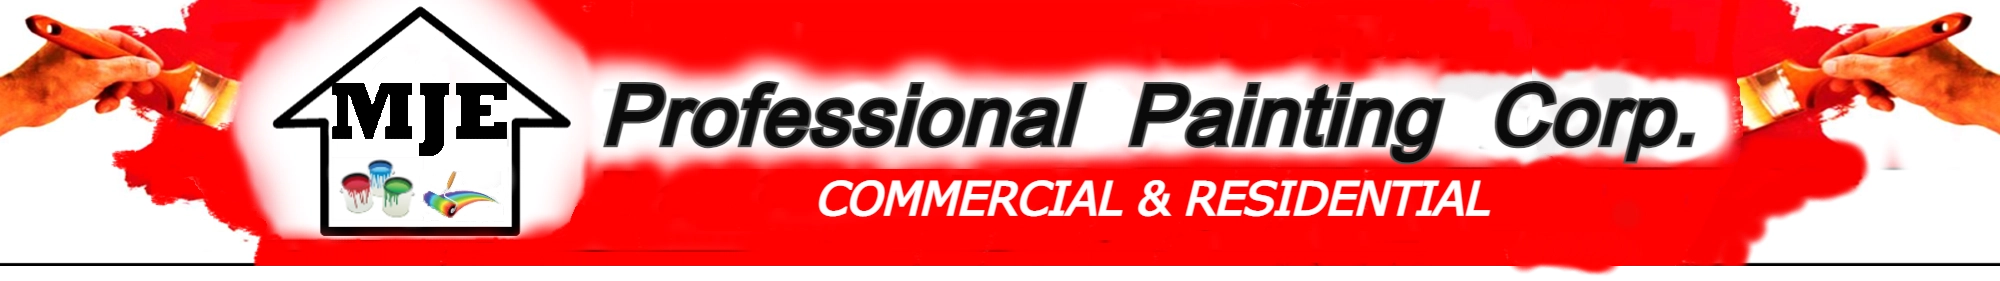 MJE Professional Painting Corp. Logo